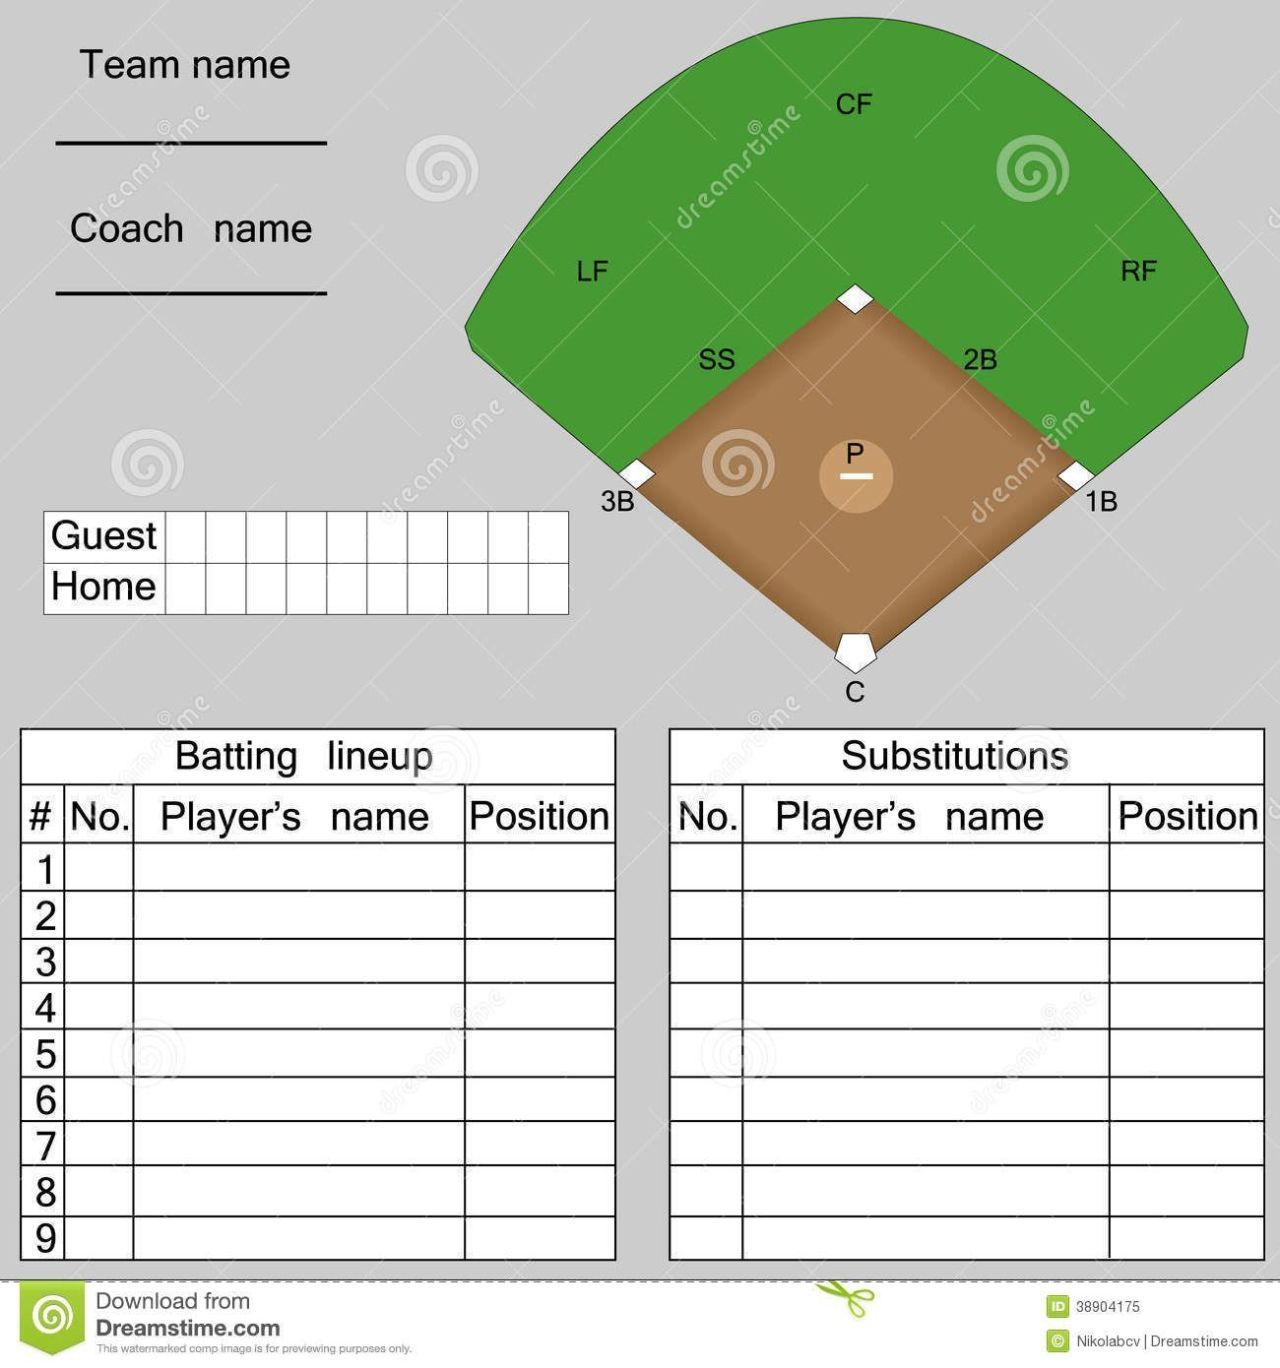 Baseball Lineup Card Template – Free Download | Baseball Regarding Dugout Lineup Card Template